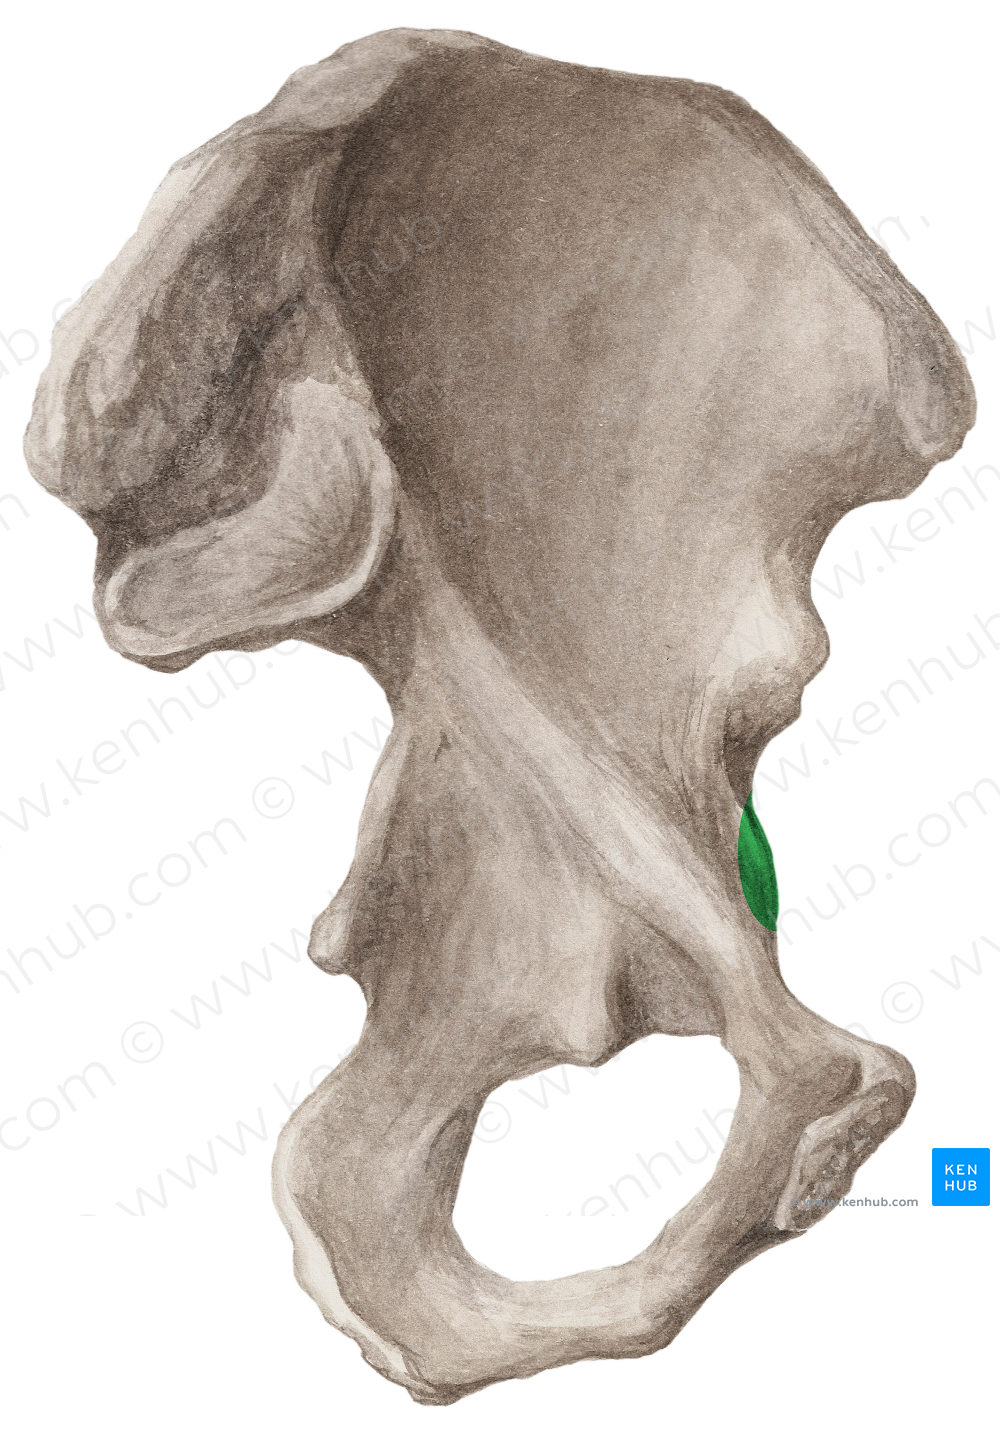 Iliopubic eminence of hip bone (#3384)